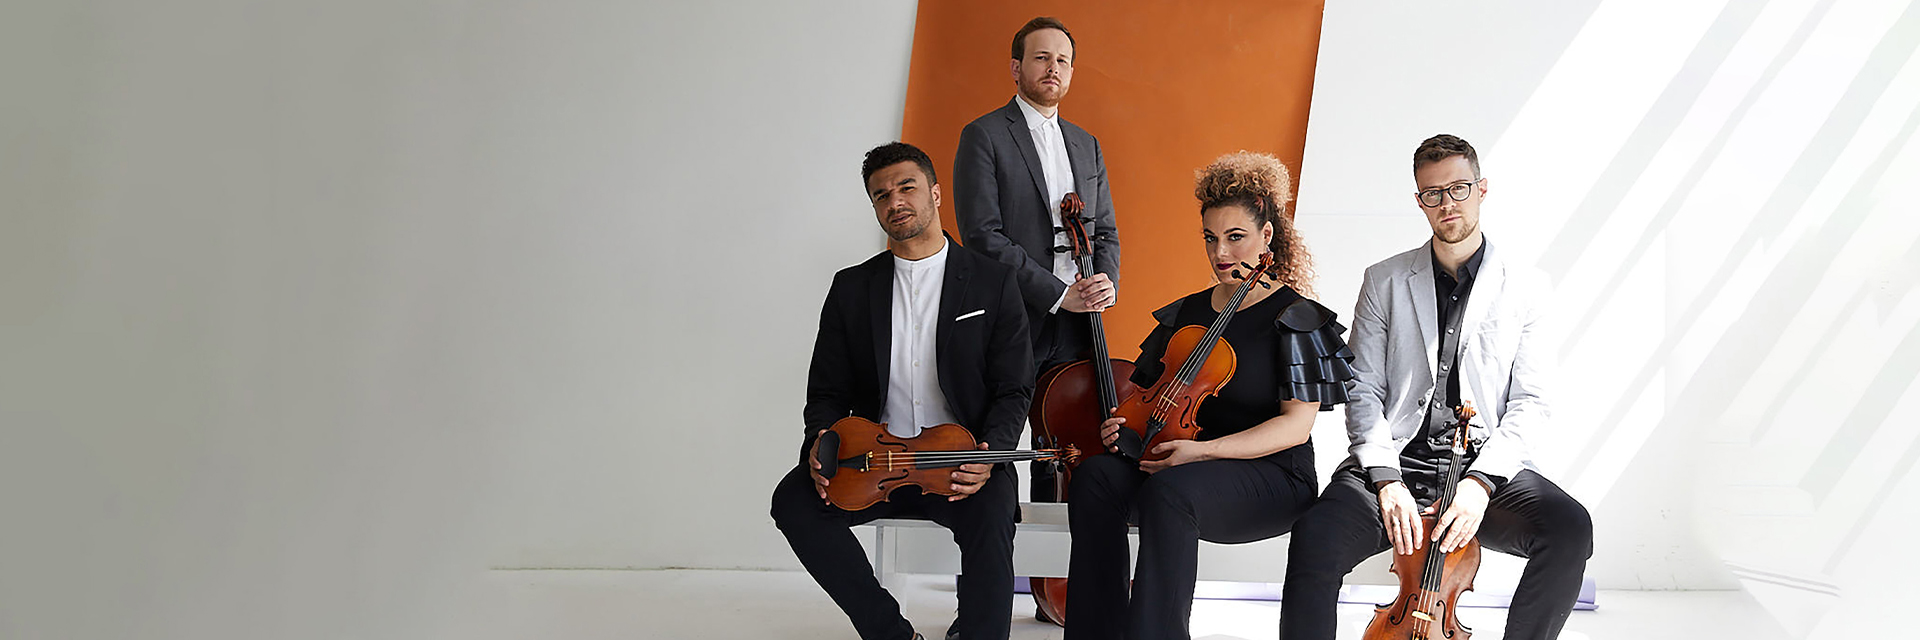 four musicians of PUBLIQuartet sitting together